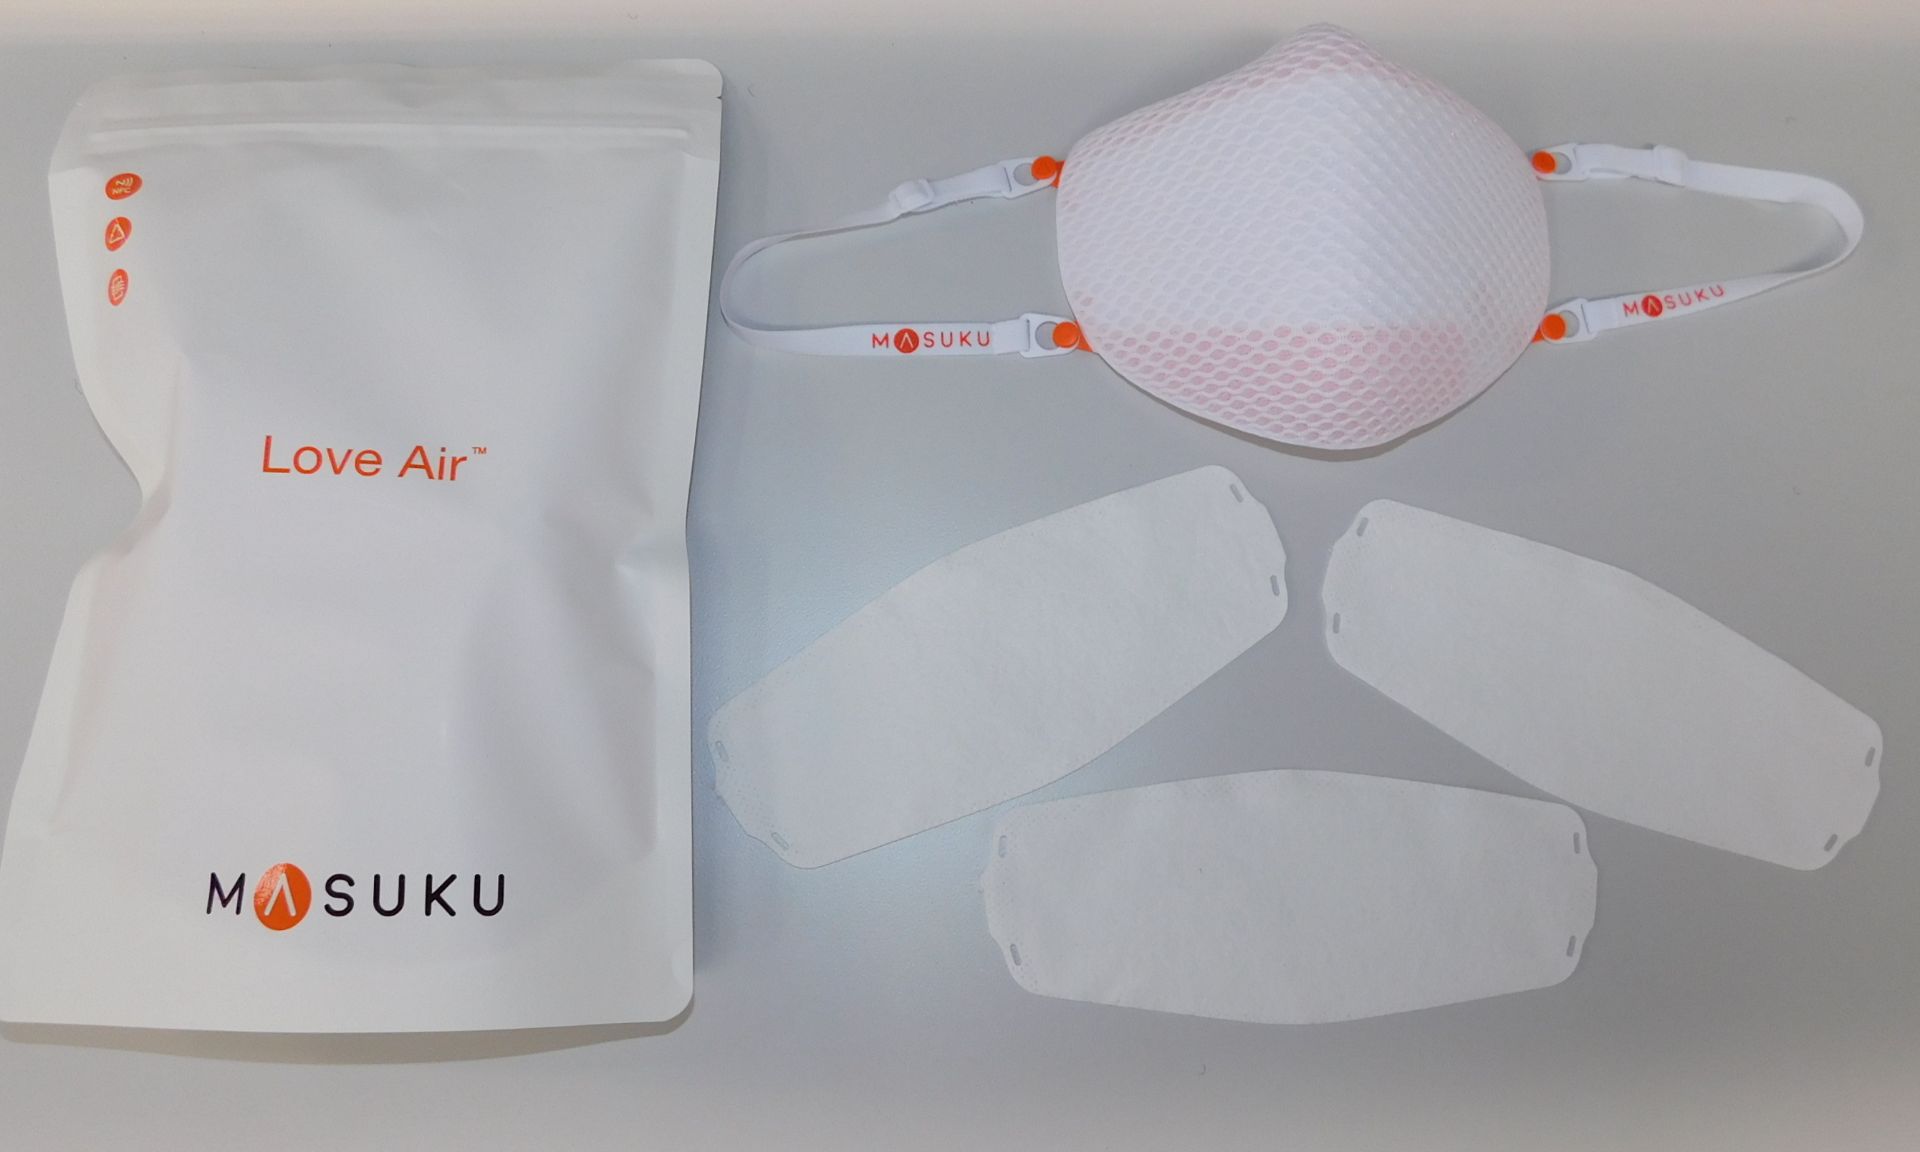 100 Masuku One Reusable Face Masks, Textured White, Medium (4 Boxes)